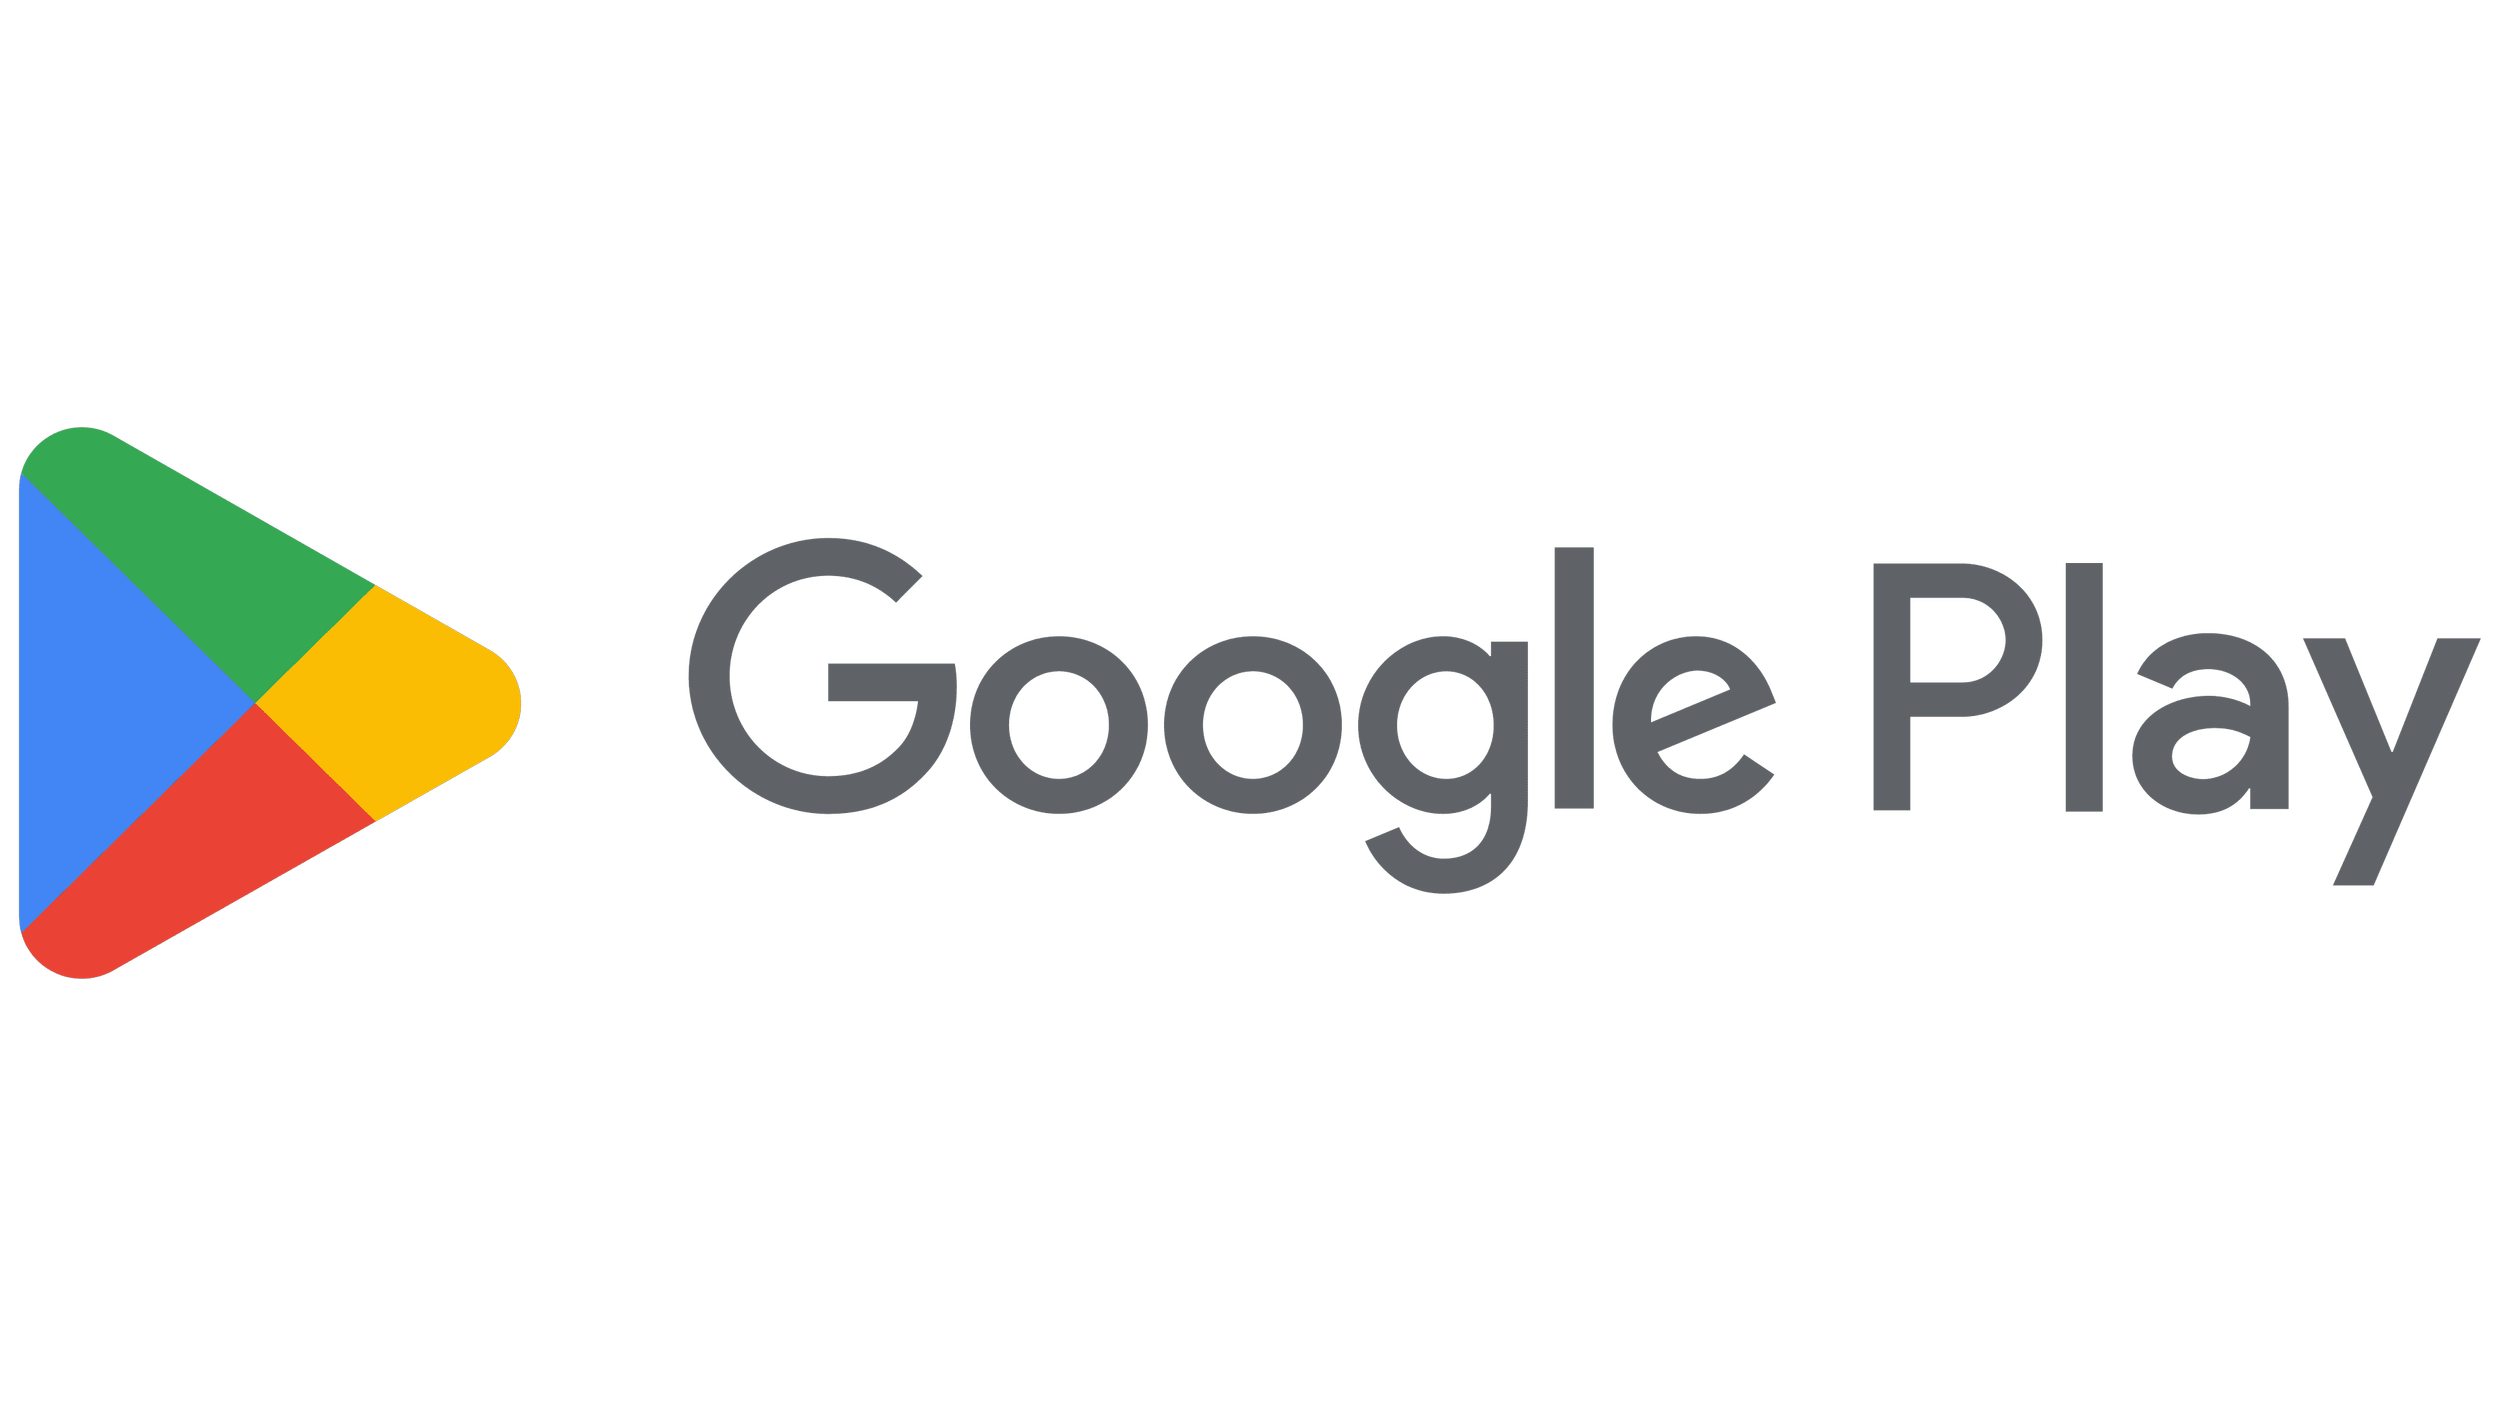 Google-Play-Logo.png